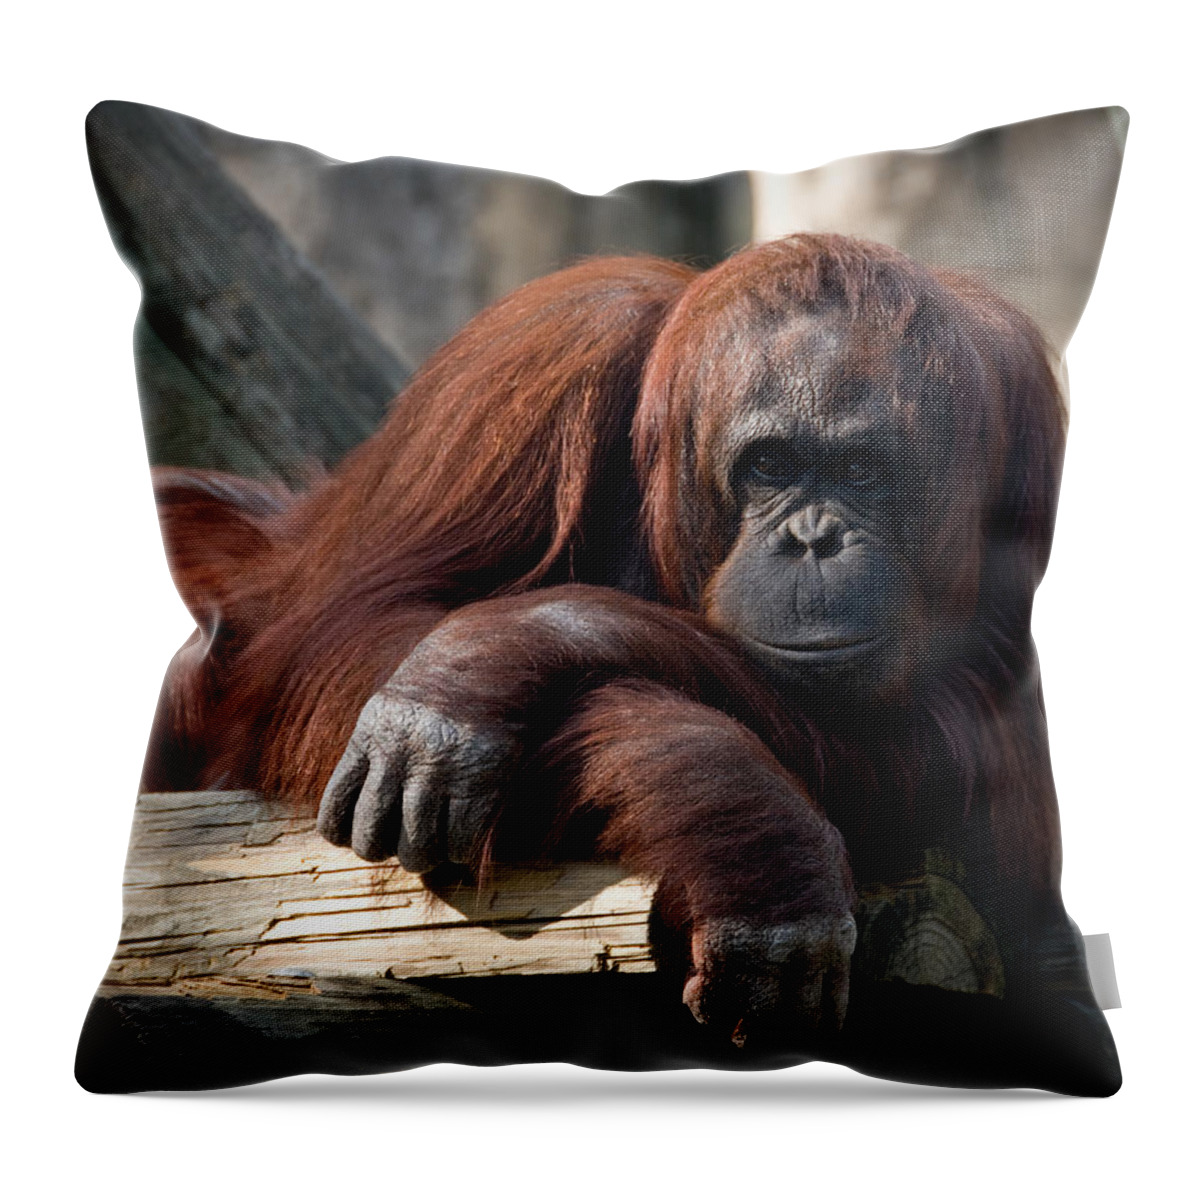 Orangutang Throw Pillow featuring the photograph Big Hands by Steven Sparks